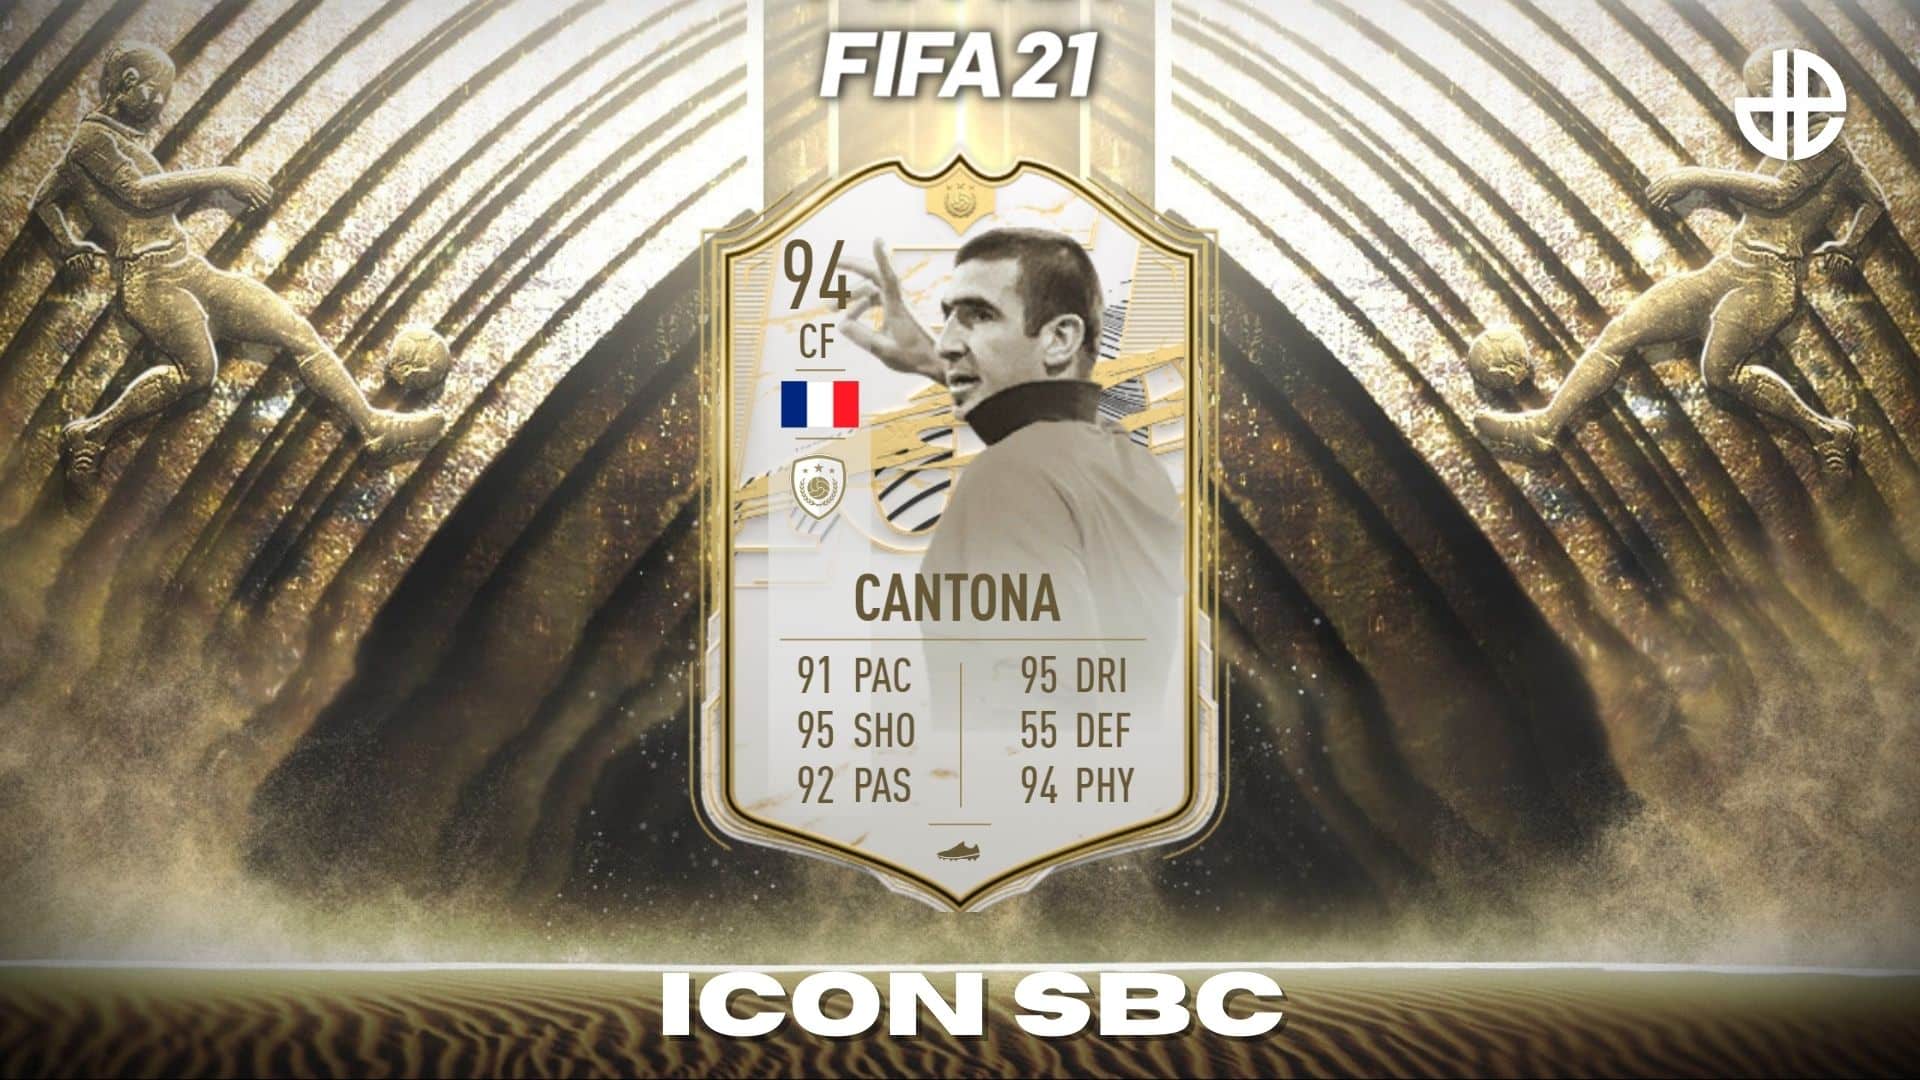 Eric Cantona FIFA 21 Prime ICON SBC